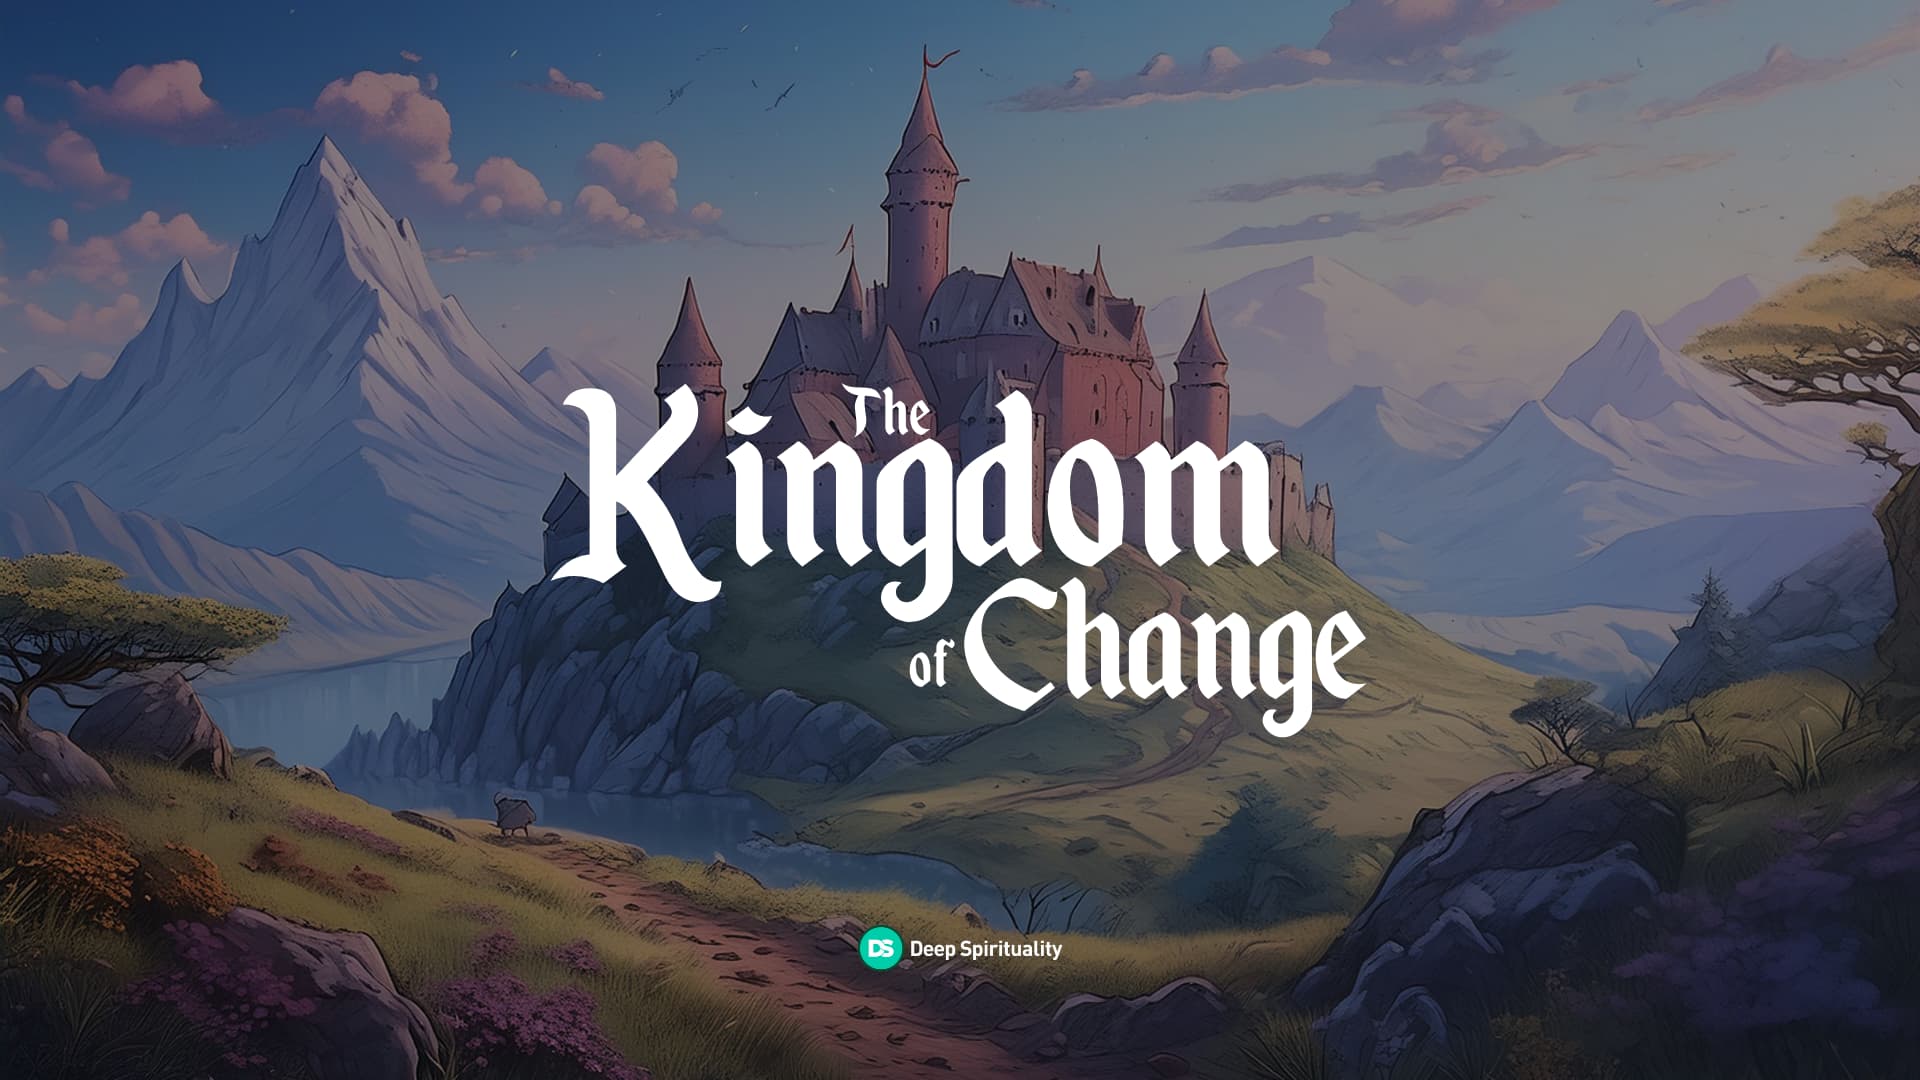 The Kingdom of Change 7